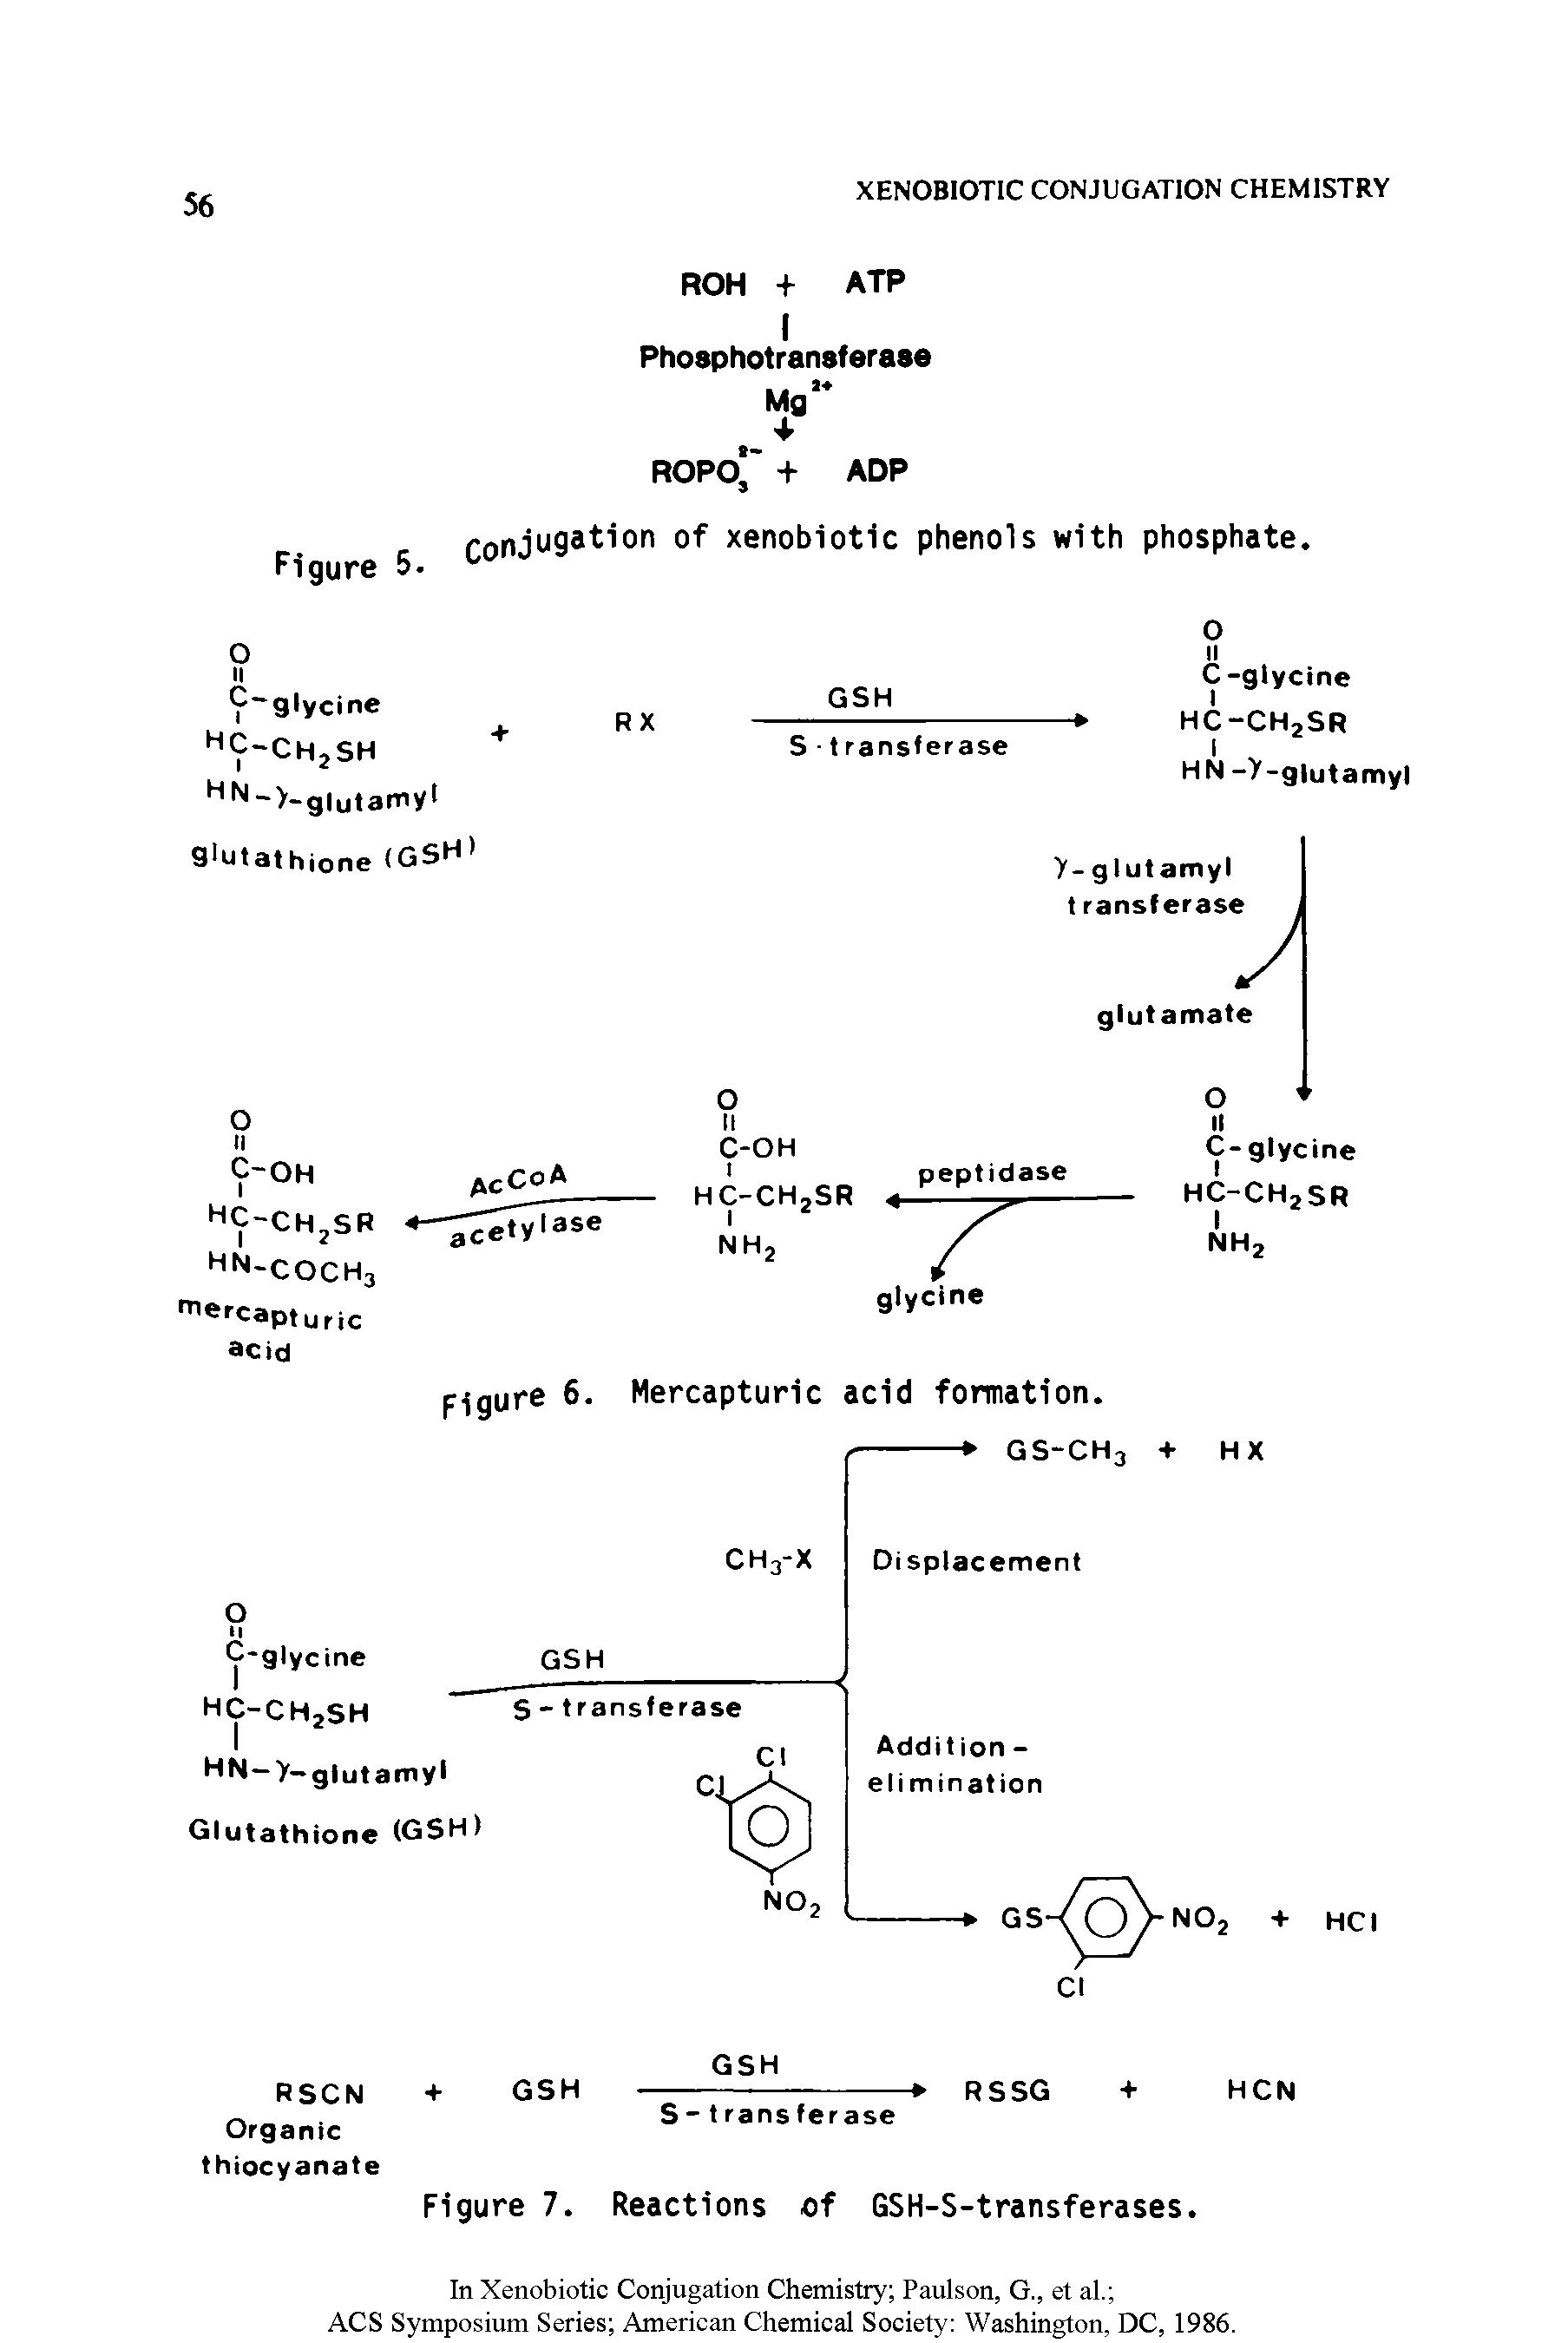 Figure 5. Conjugation of xenobiotic phenols with phosphate.